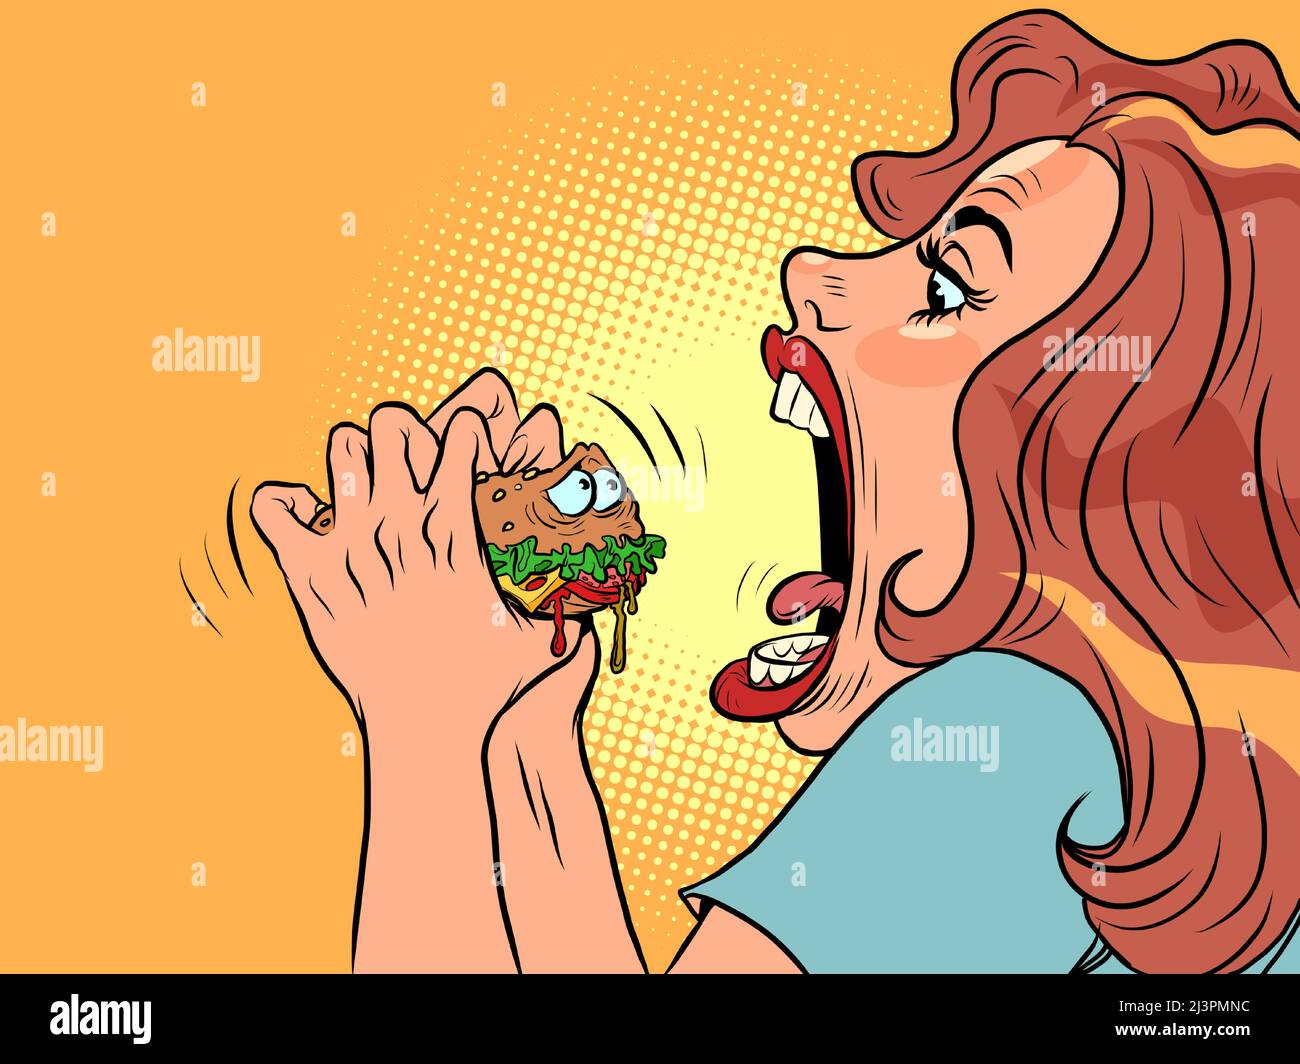 Woman bites cute burger character in restaurant, Fast food humor Stock Vector